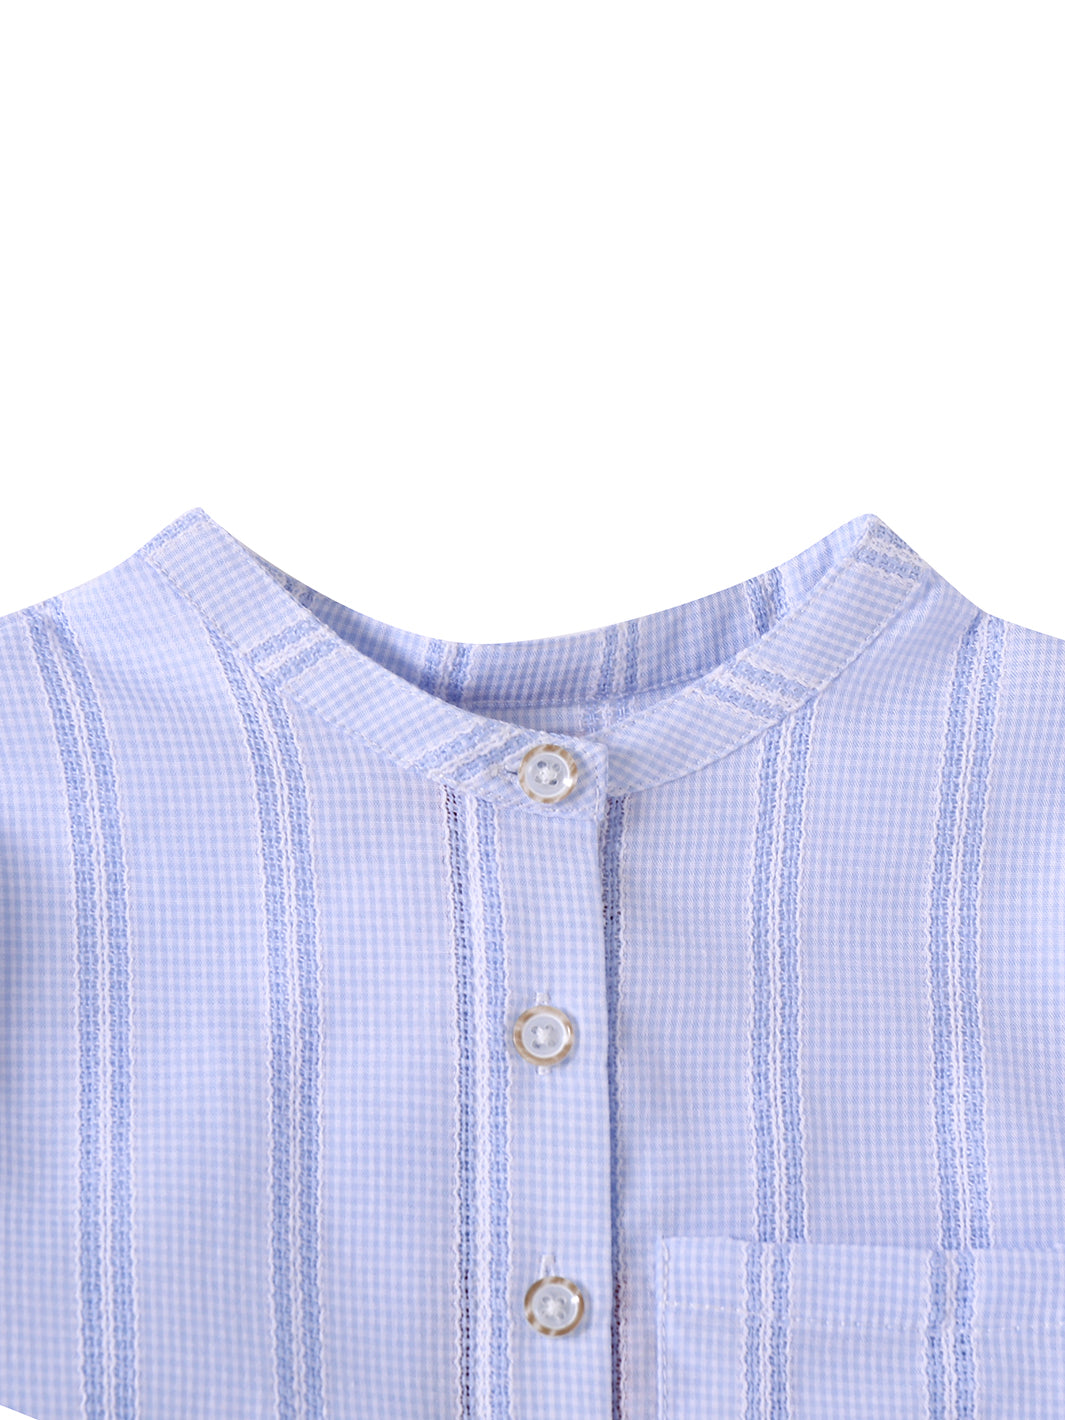 Gingham Crochet Striped Shirt - Lt. Blue